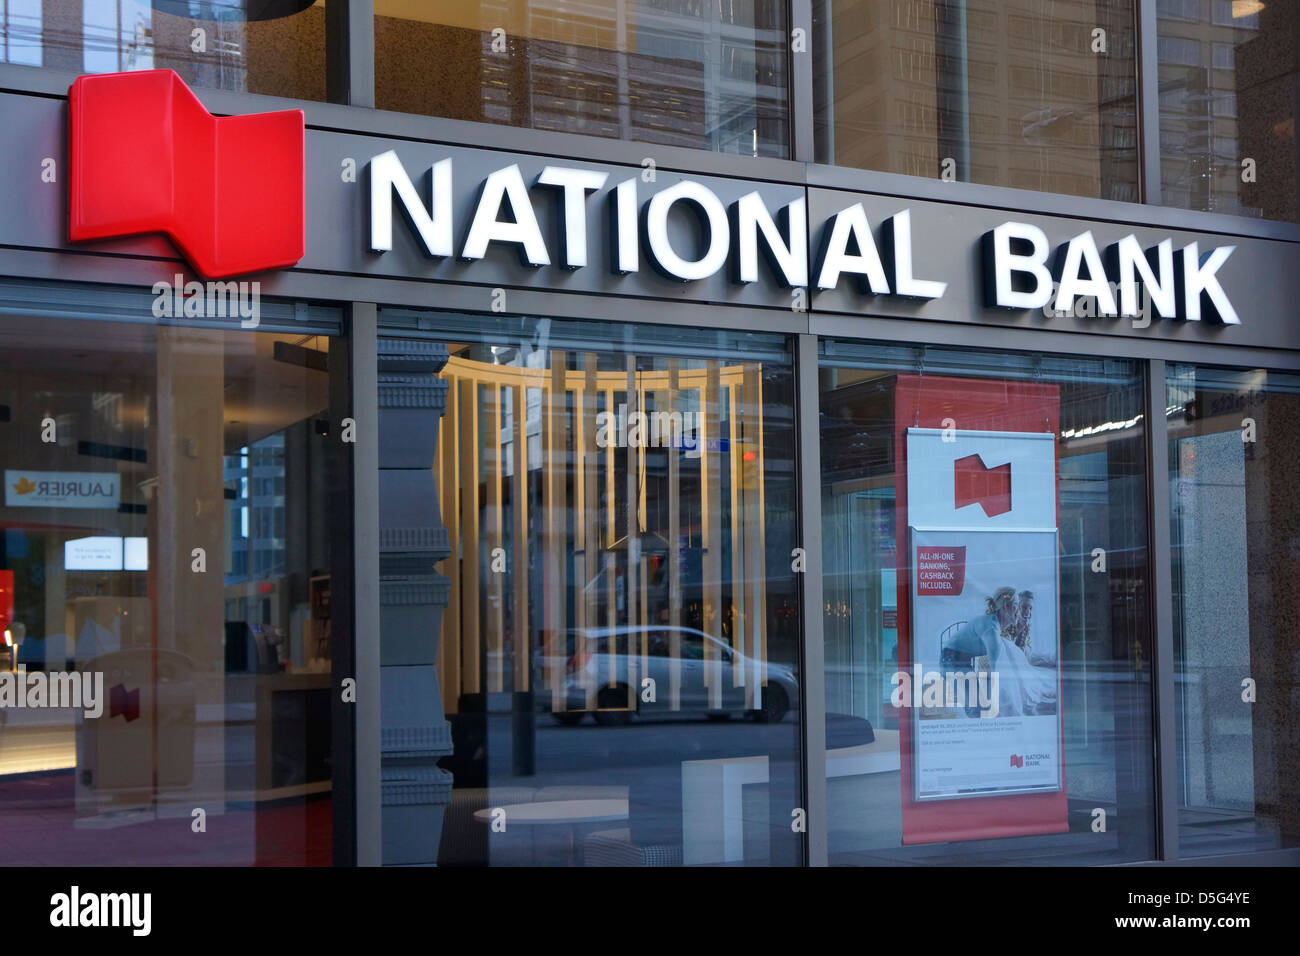 National Bank of Canada, Toronto Stock Photo Alamy